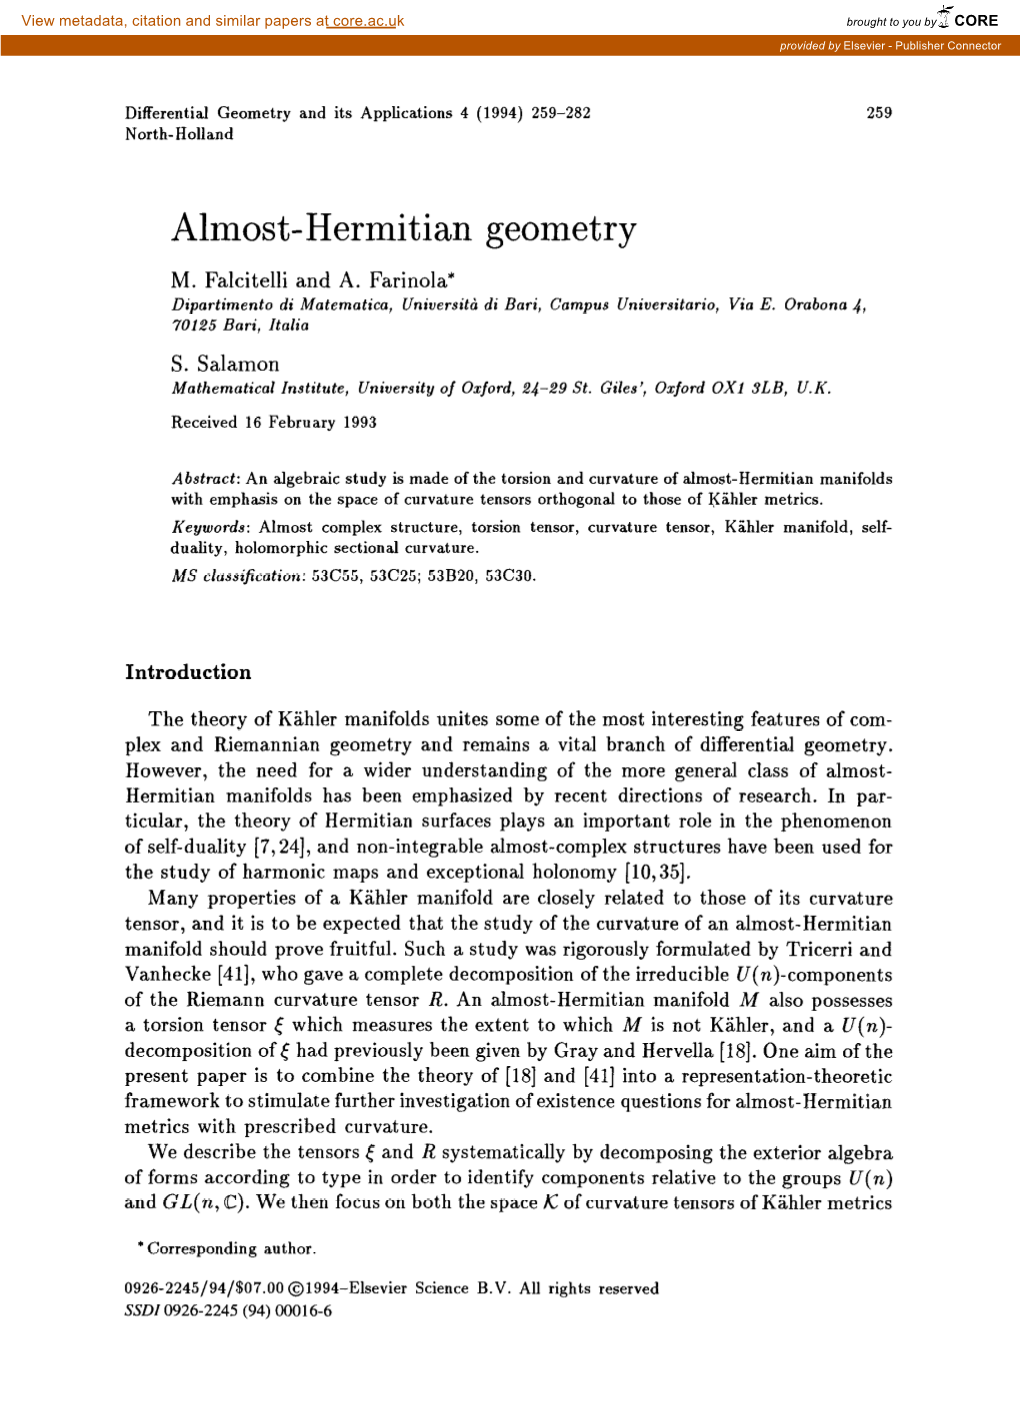 Almost-Hermitian Geometry